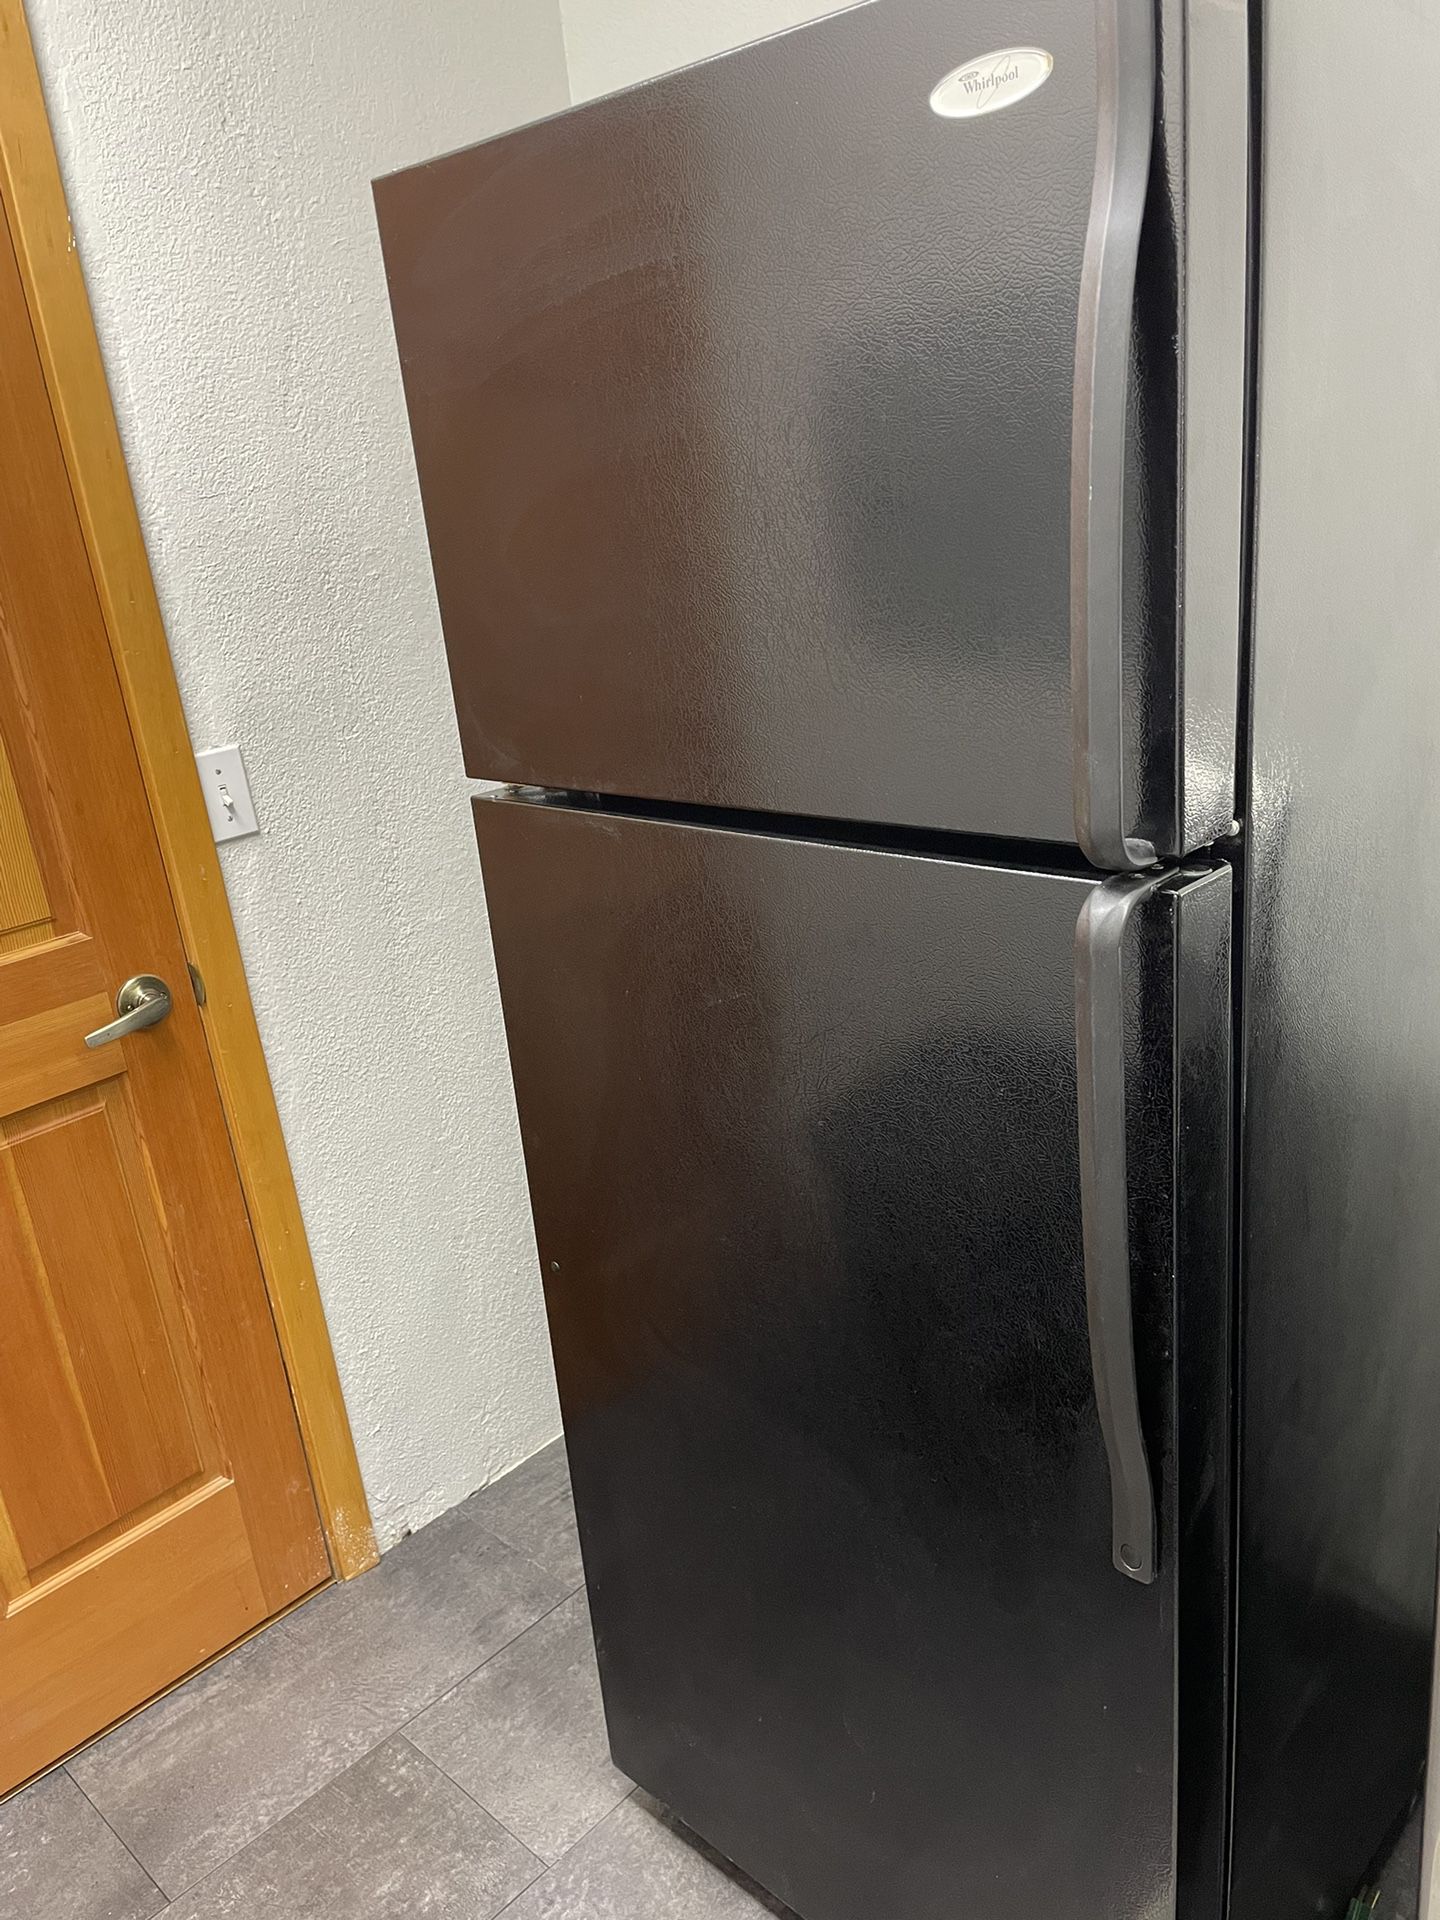 Black Whirlpool Refrigerator/freezer